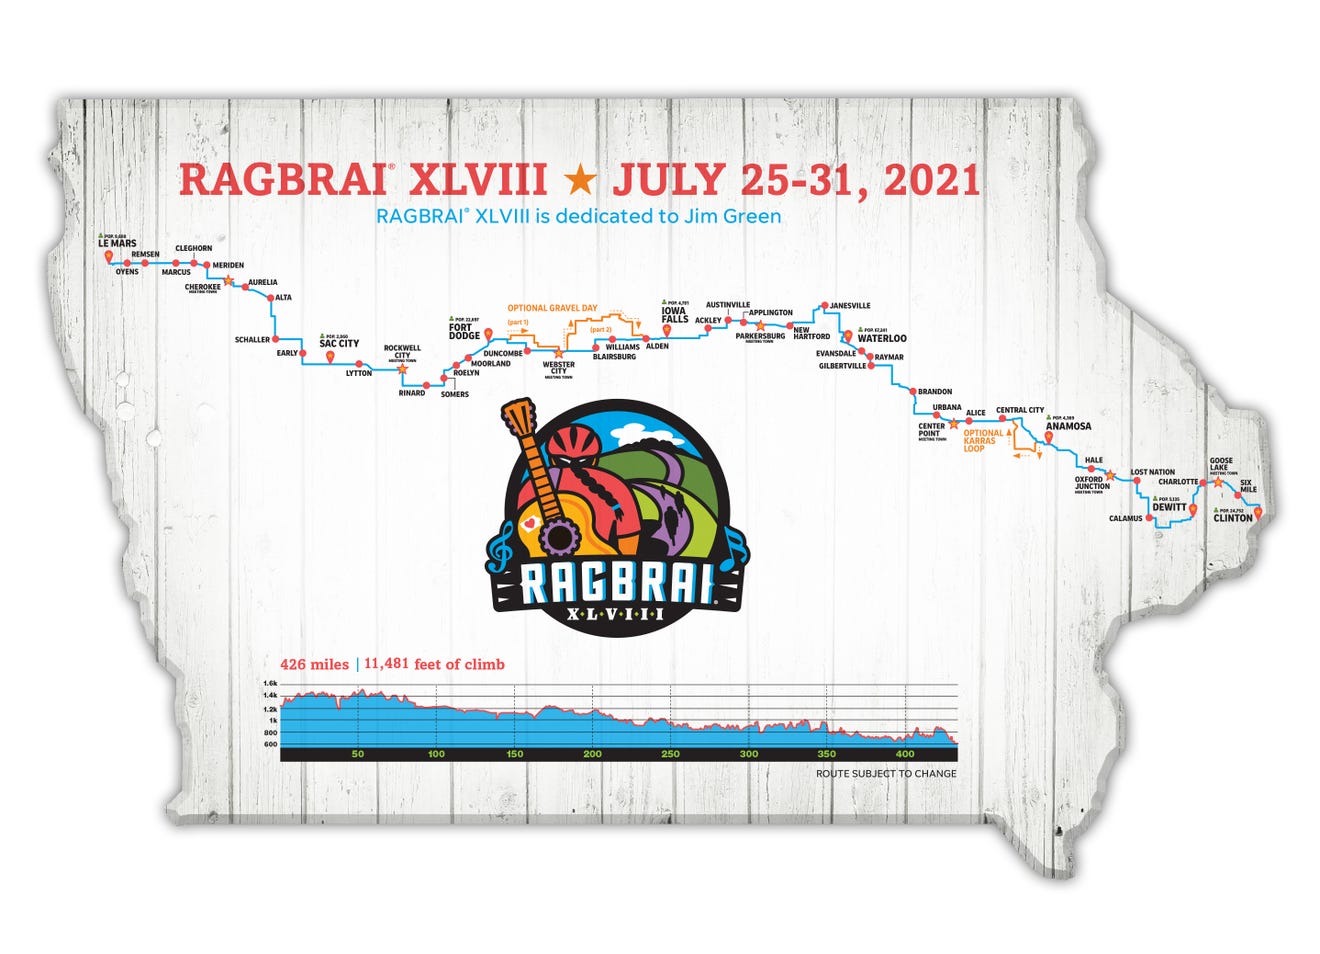 Full route for RAGBRAI XLVIII announced; Sac City, DeWitt added